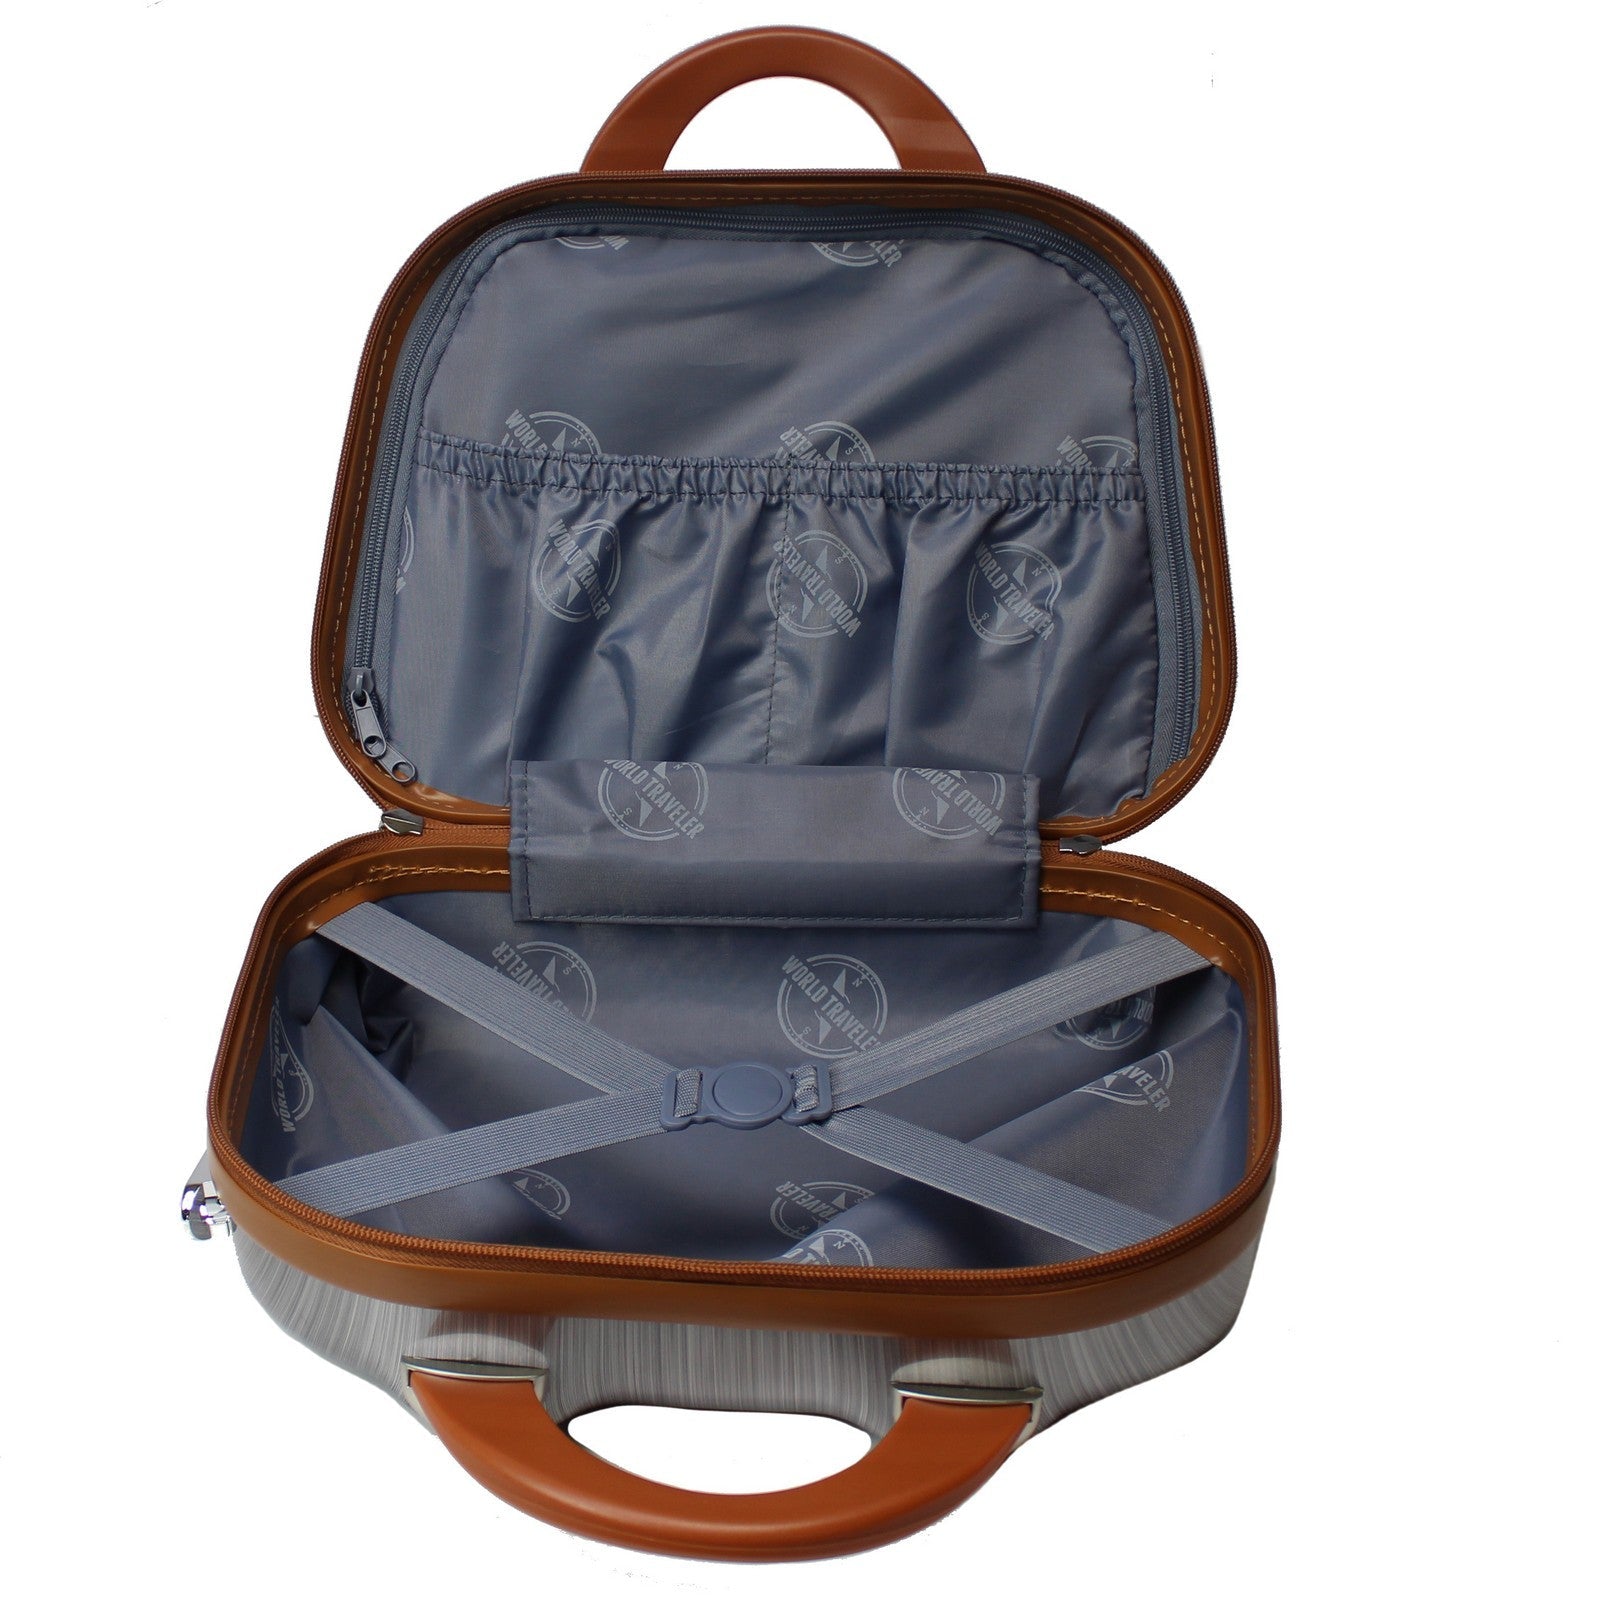 World Traveler Classique Lightweight Spinner 2-Piece Luggage Set - Rose Gold